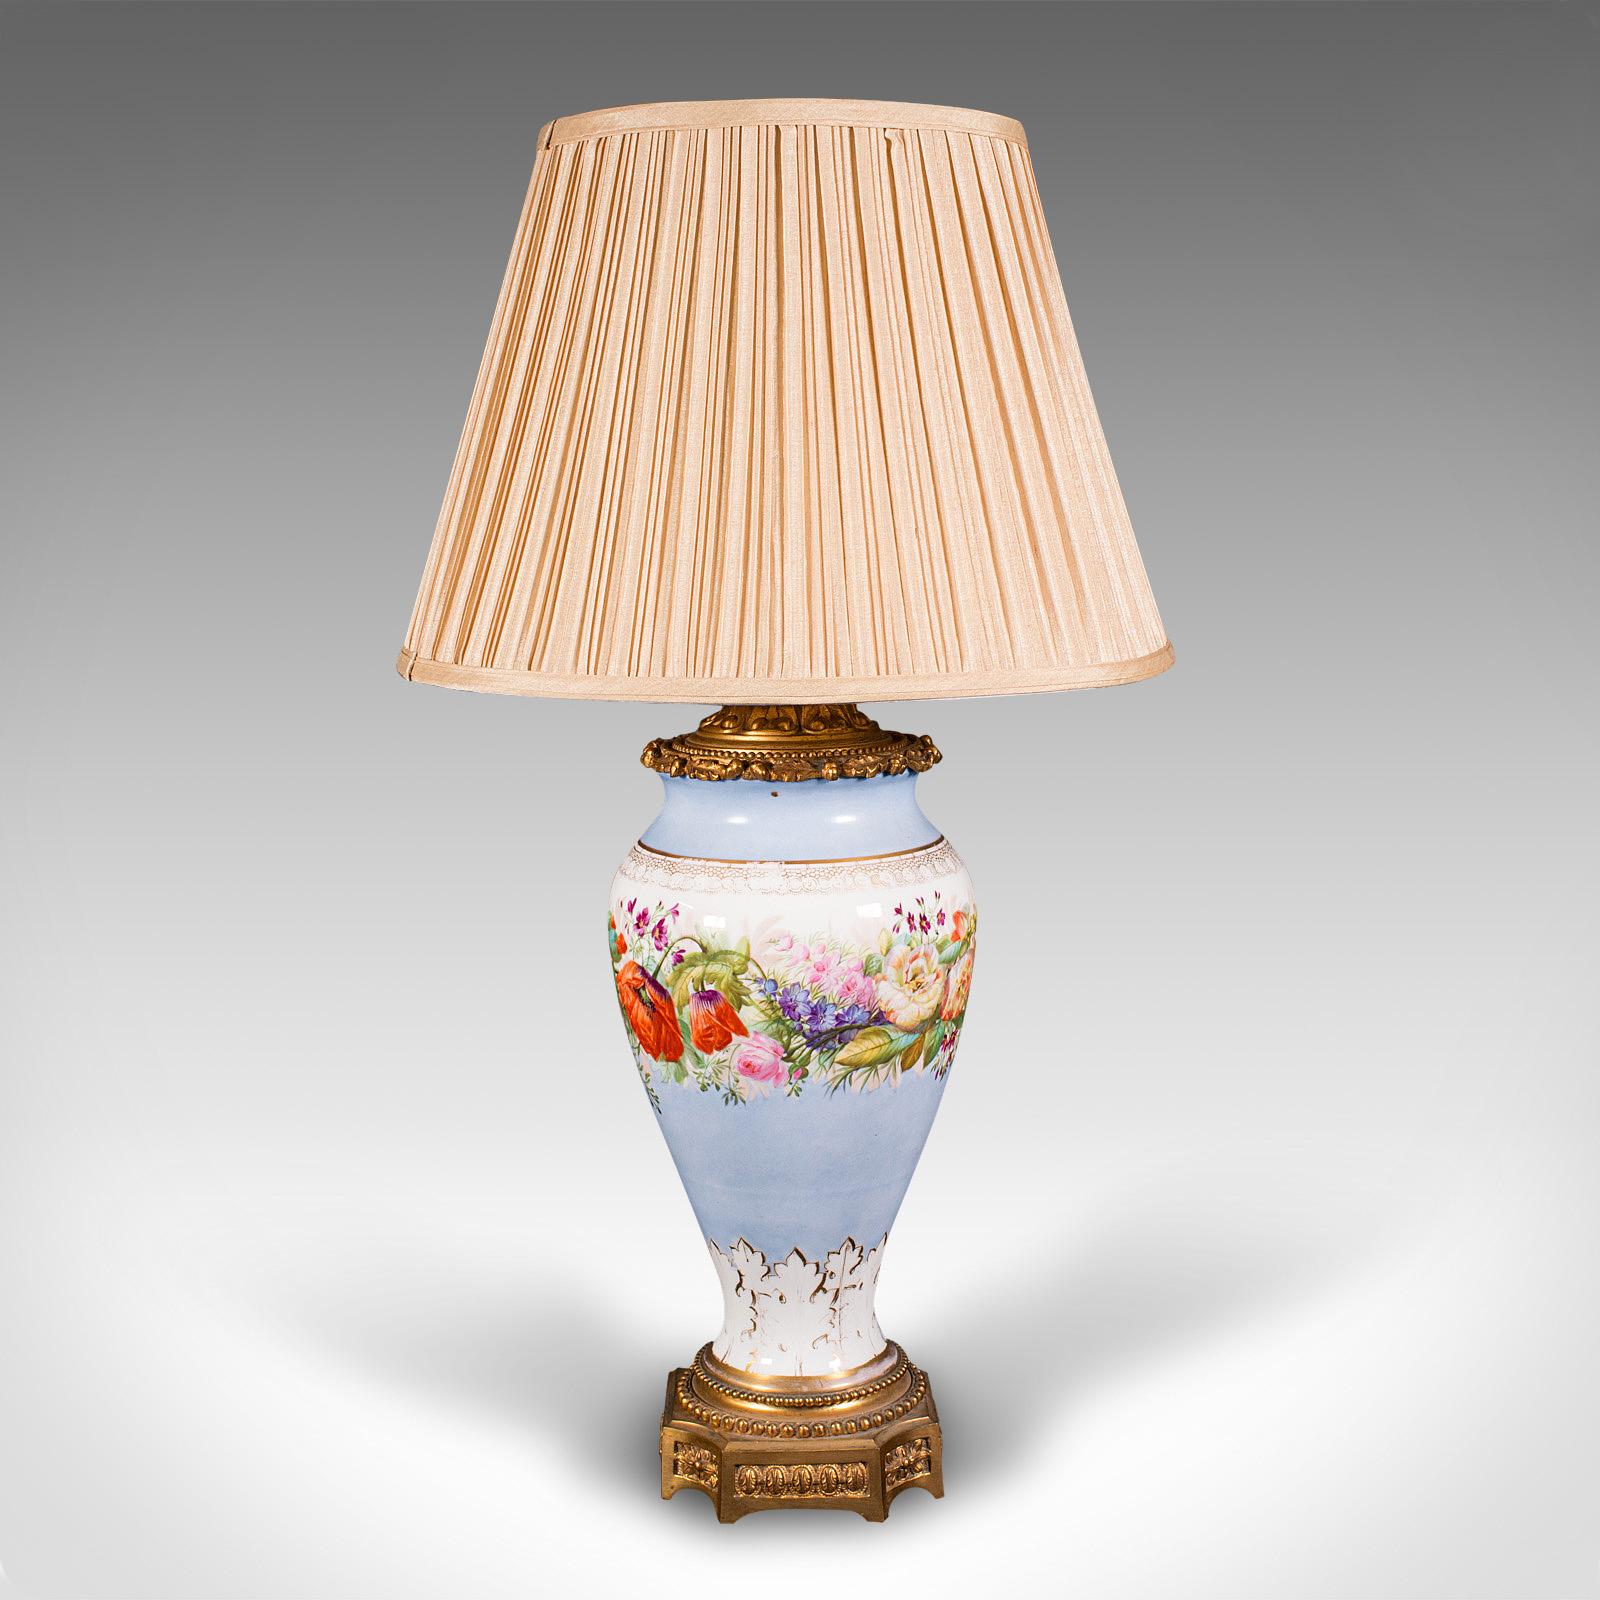 Vintage Cafe Lamp, French, Ceramic, Gilt Metal, Decorative Table Light, C.1930 For Sale 1